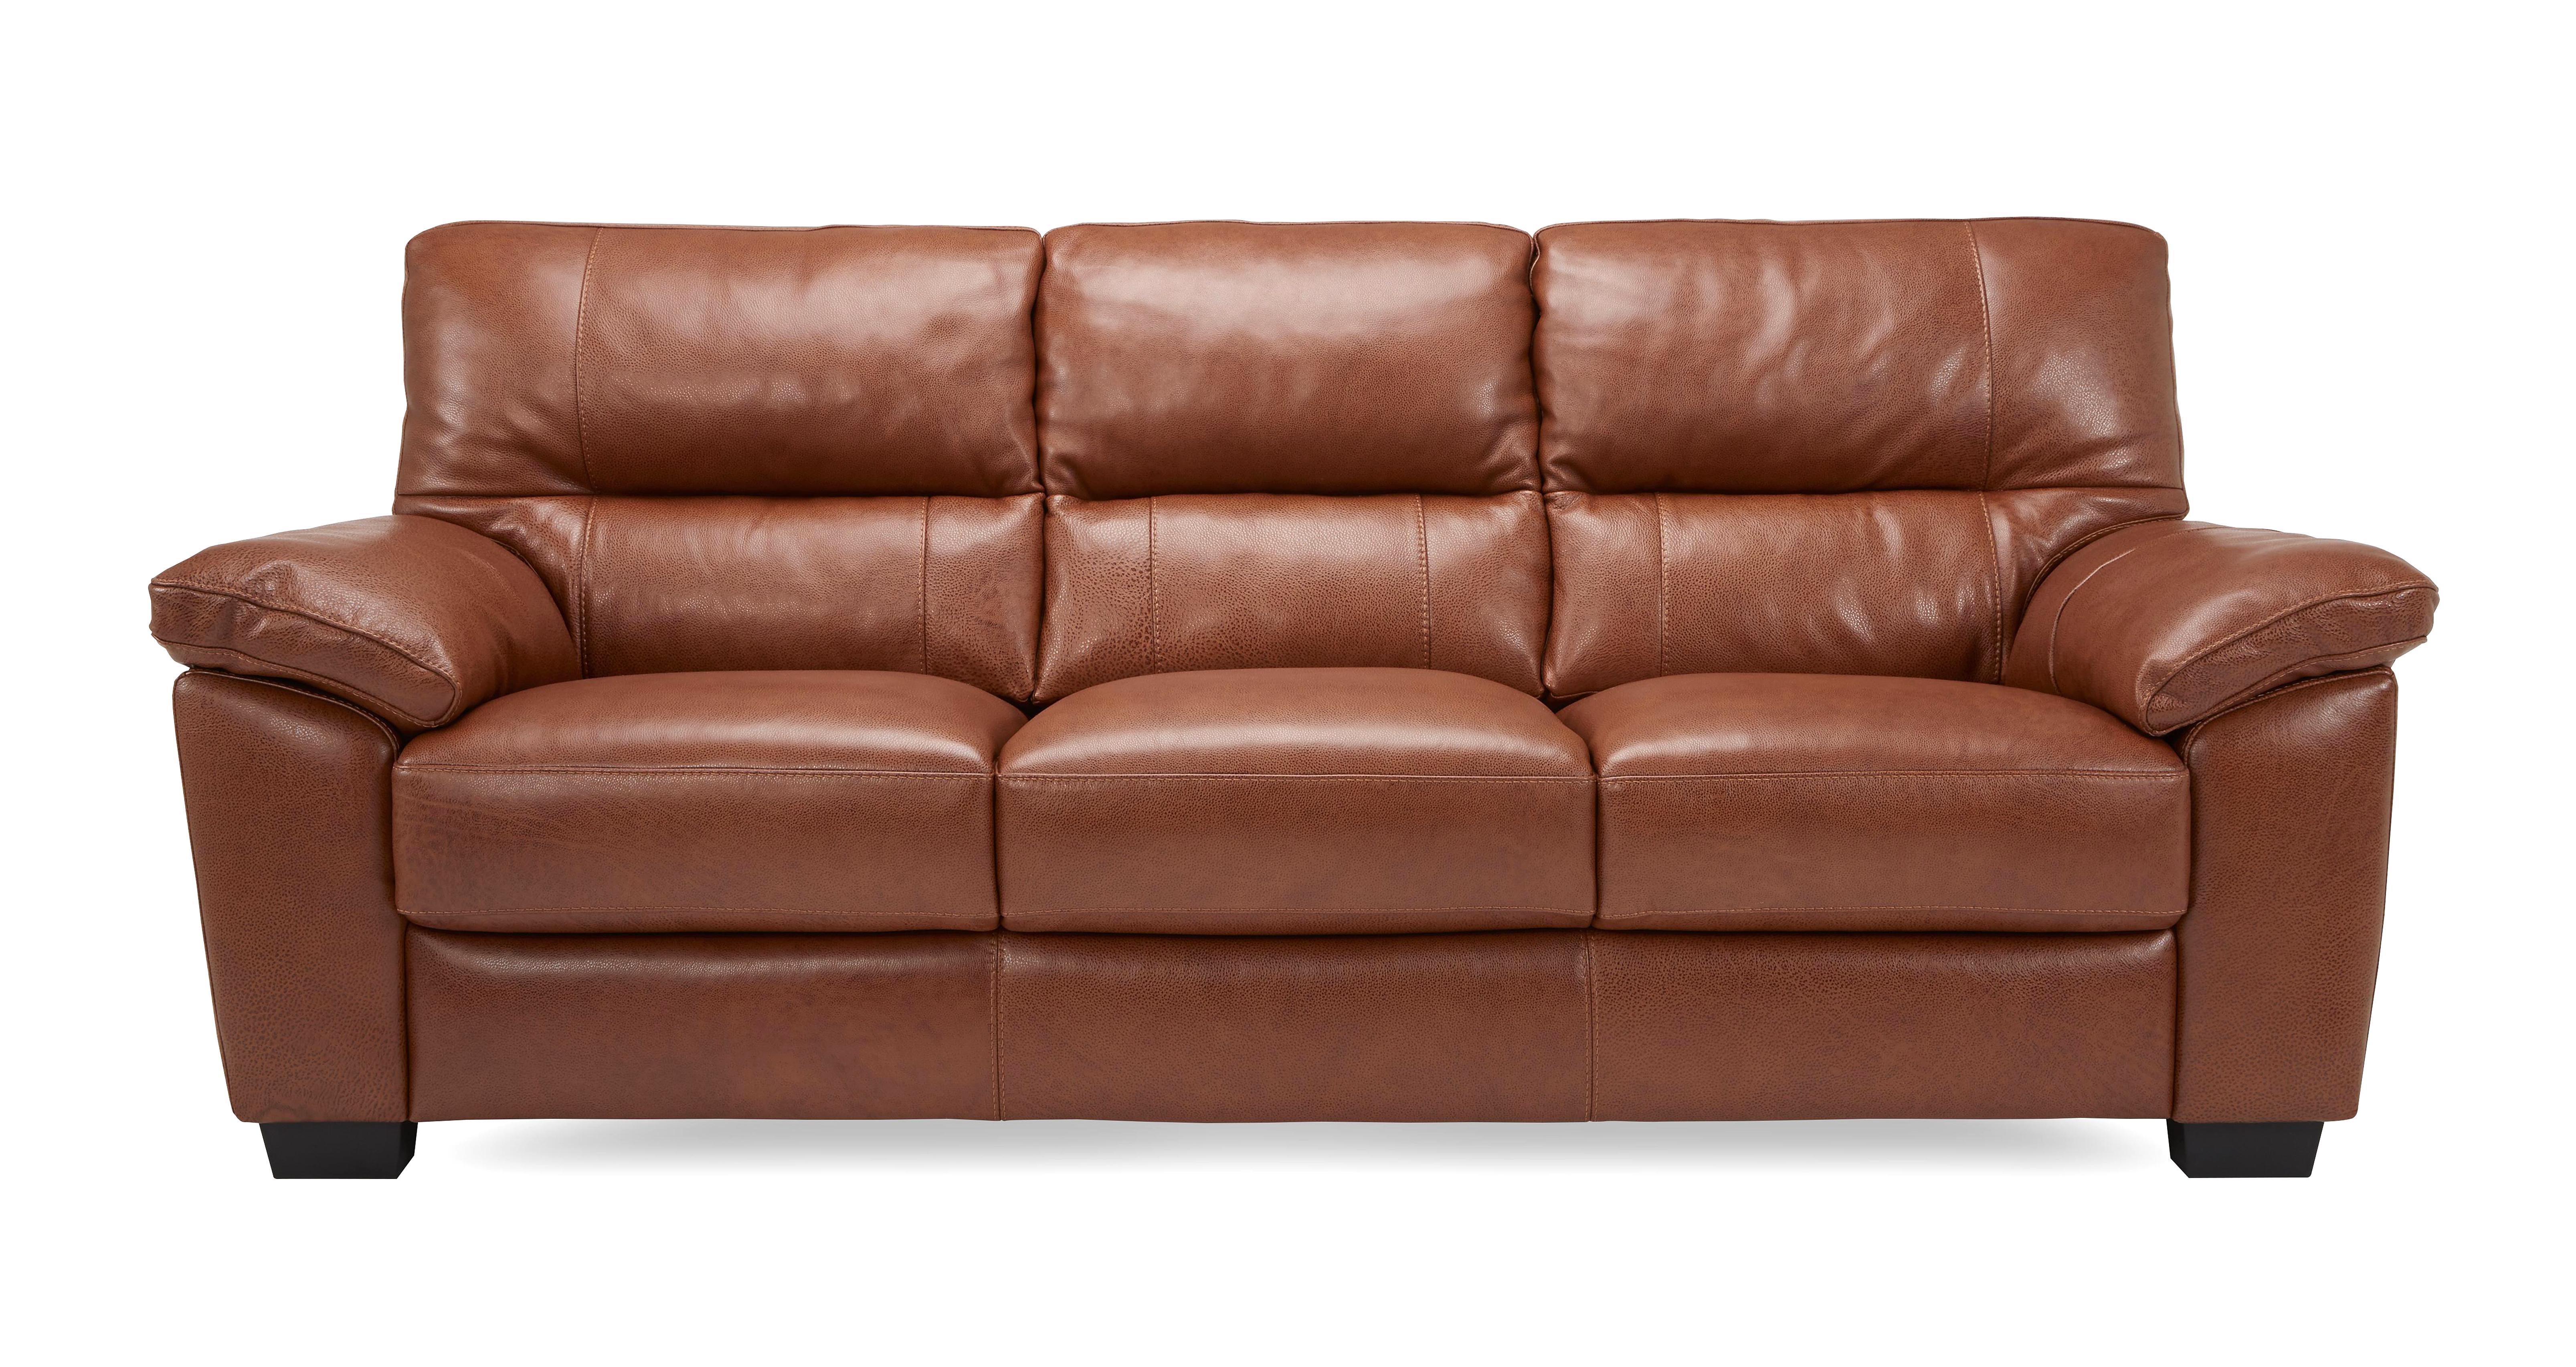 dfs hackney leather sofa